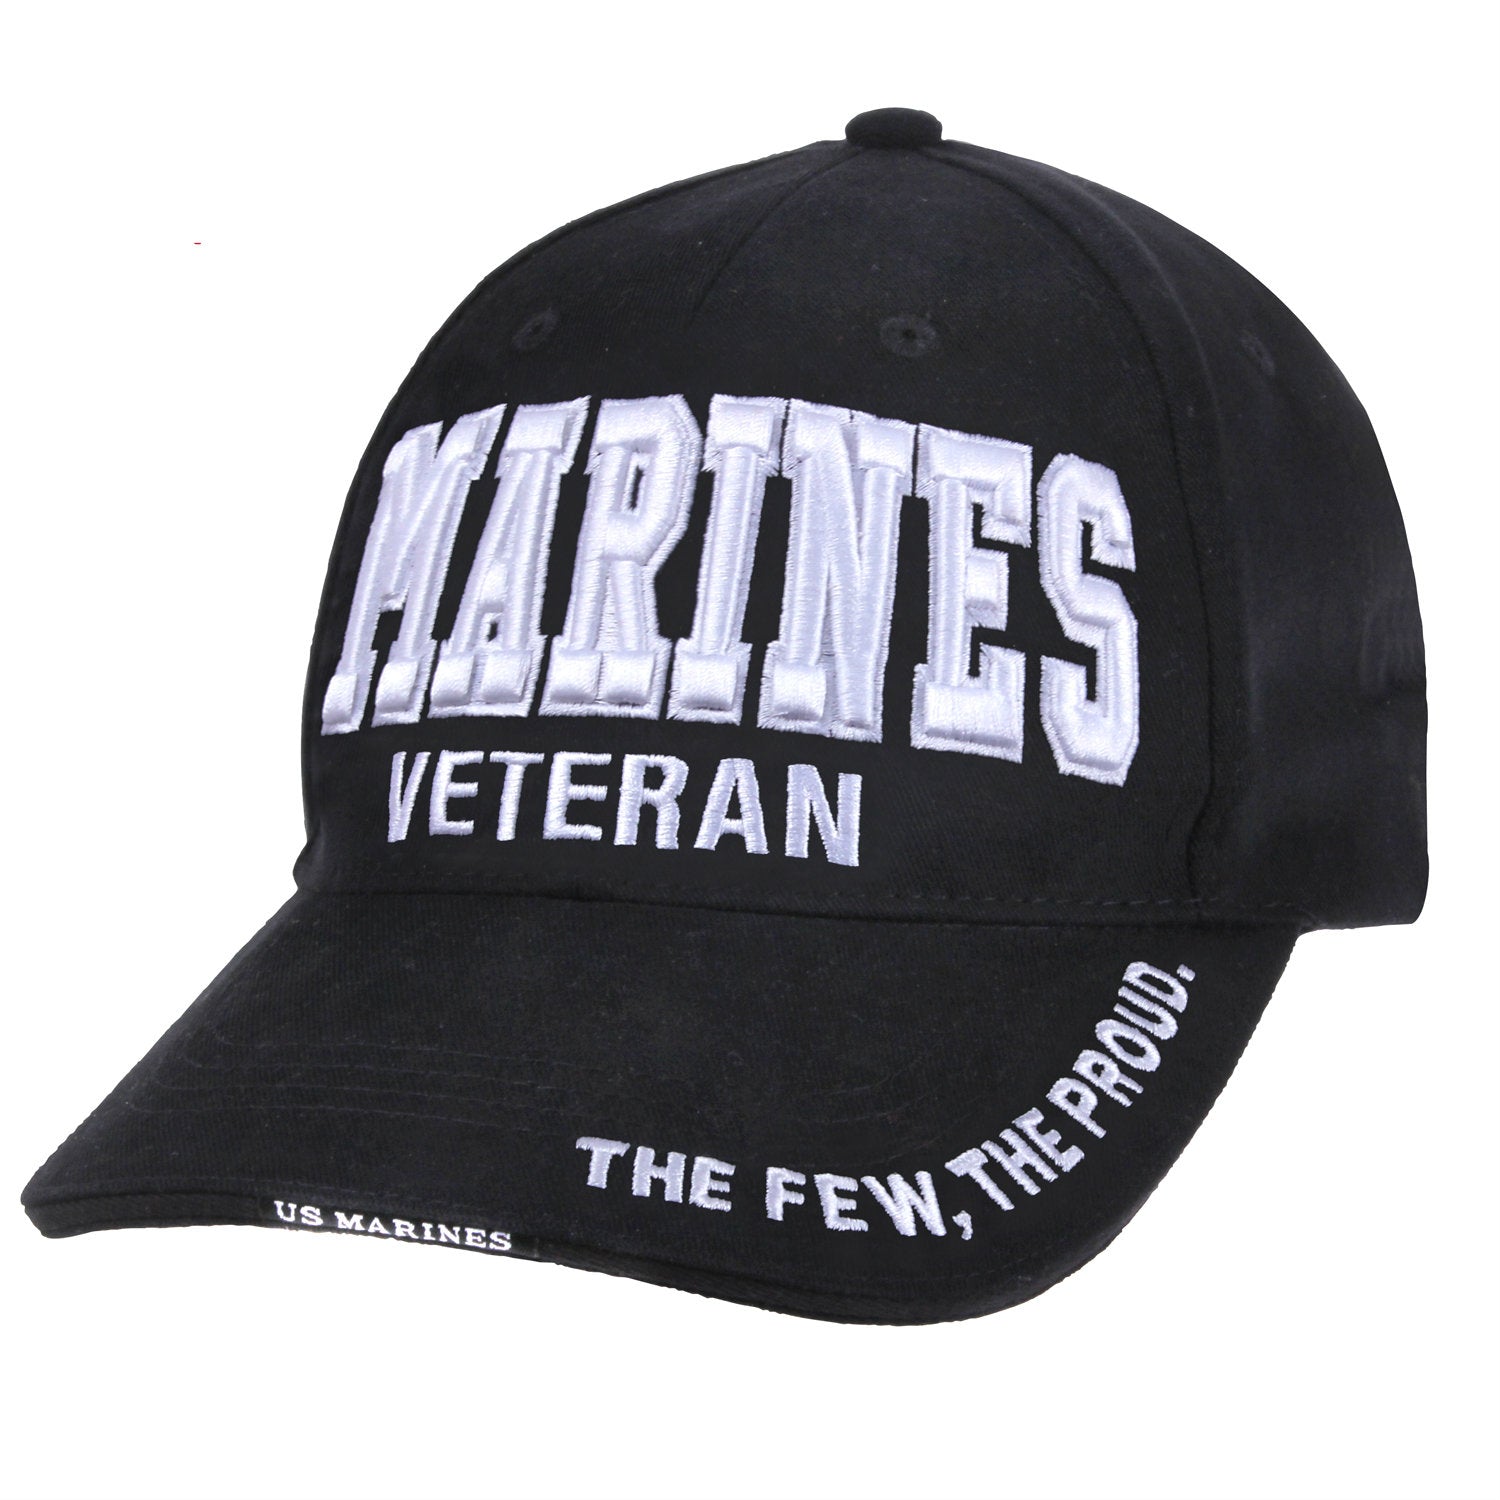 Marine Veteran Text Hat Black